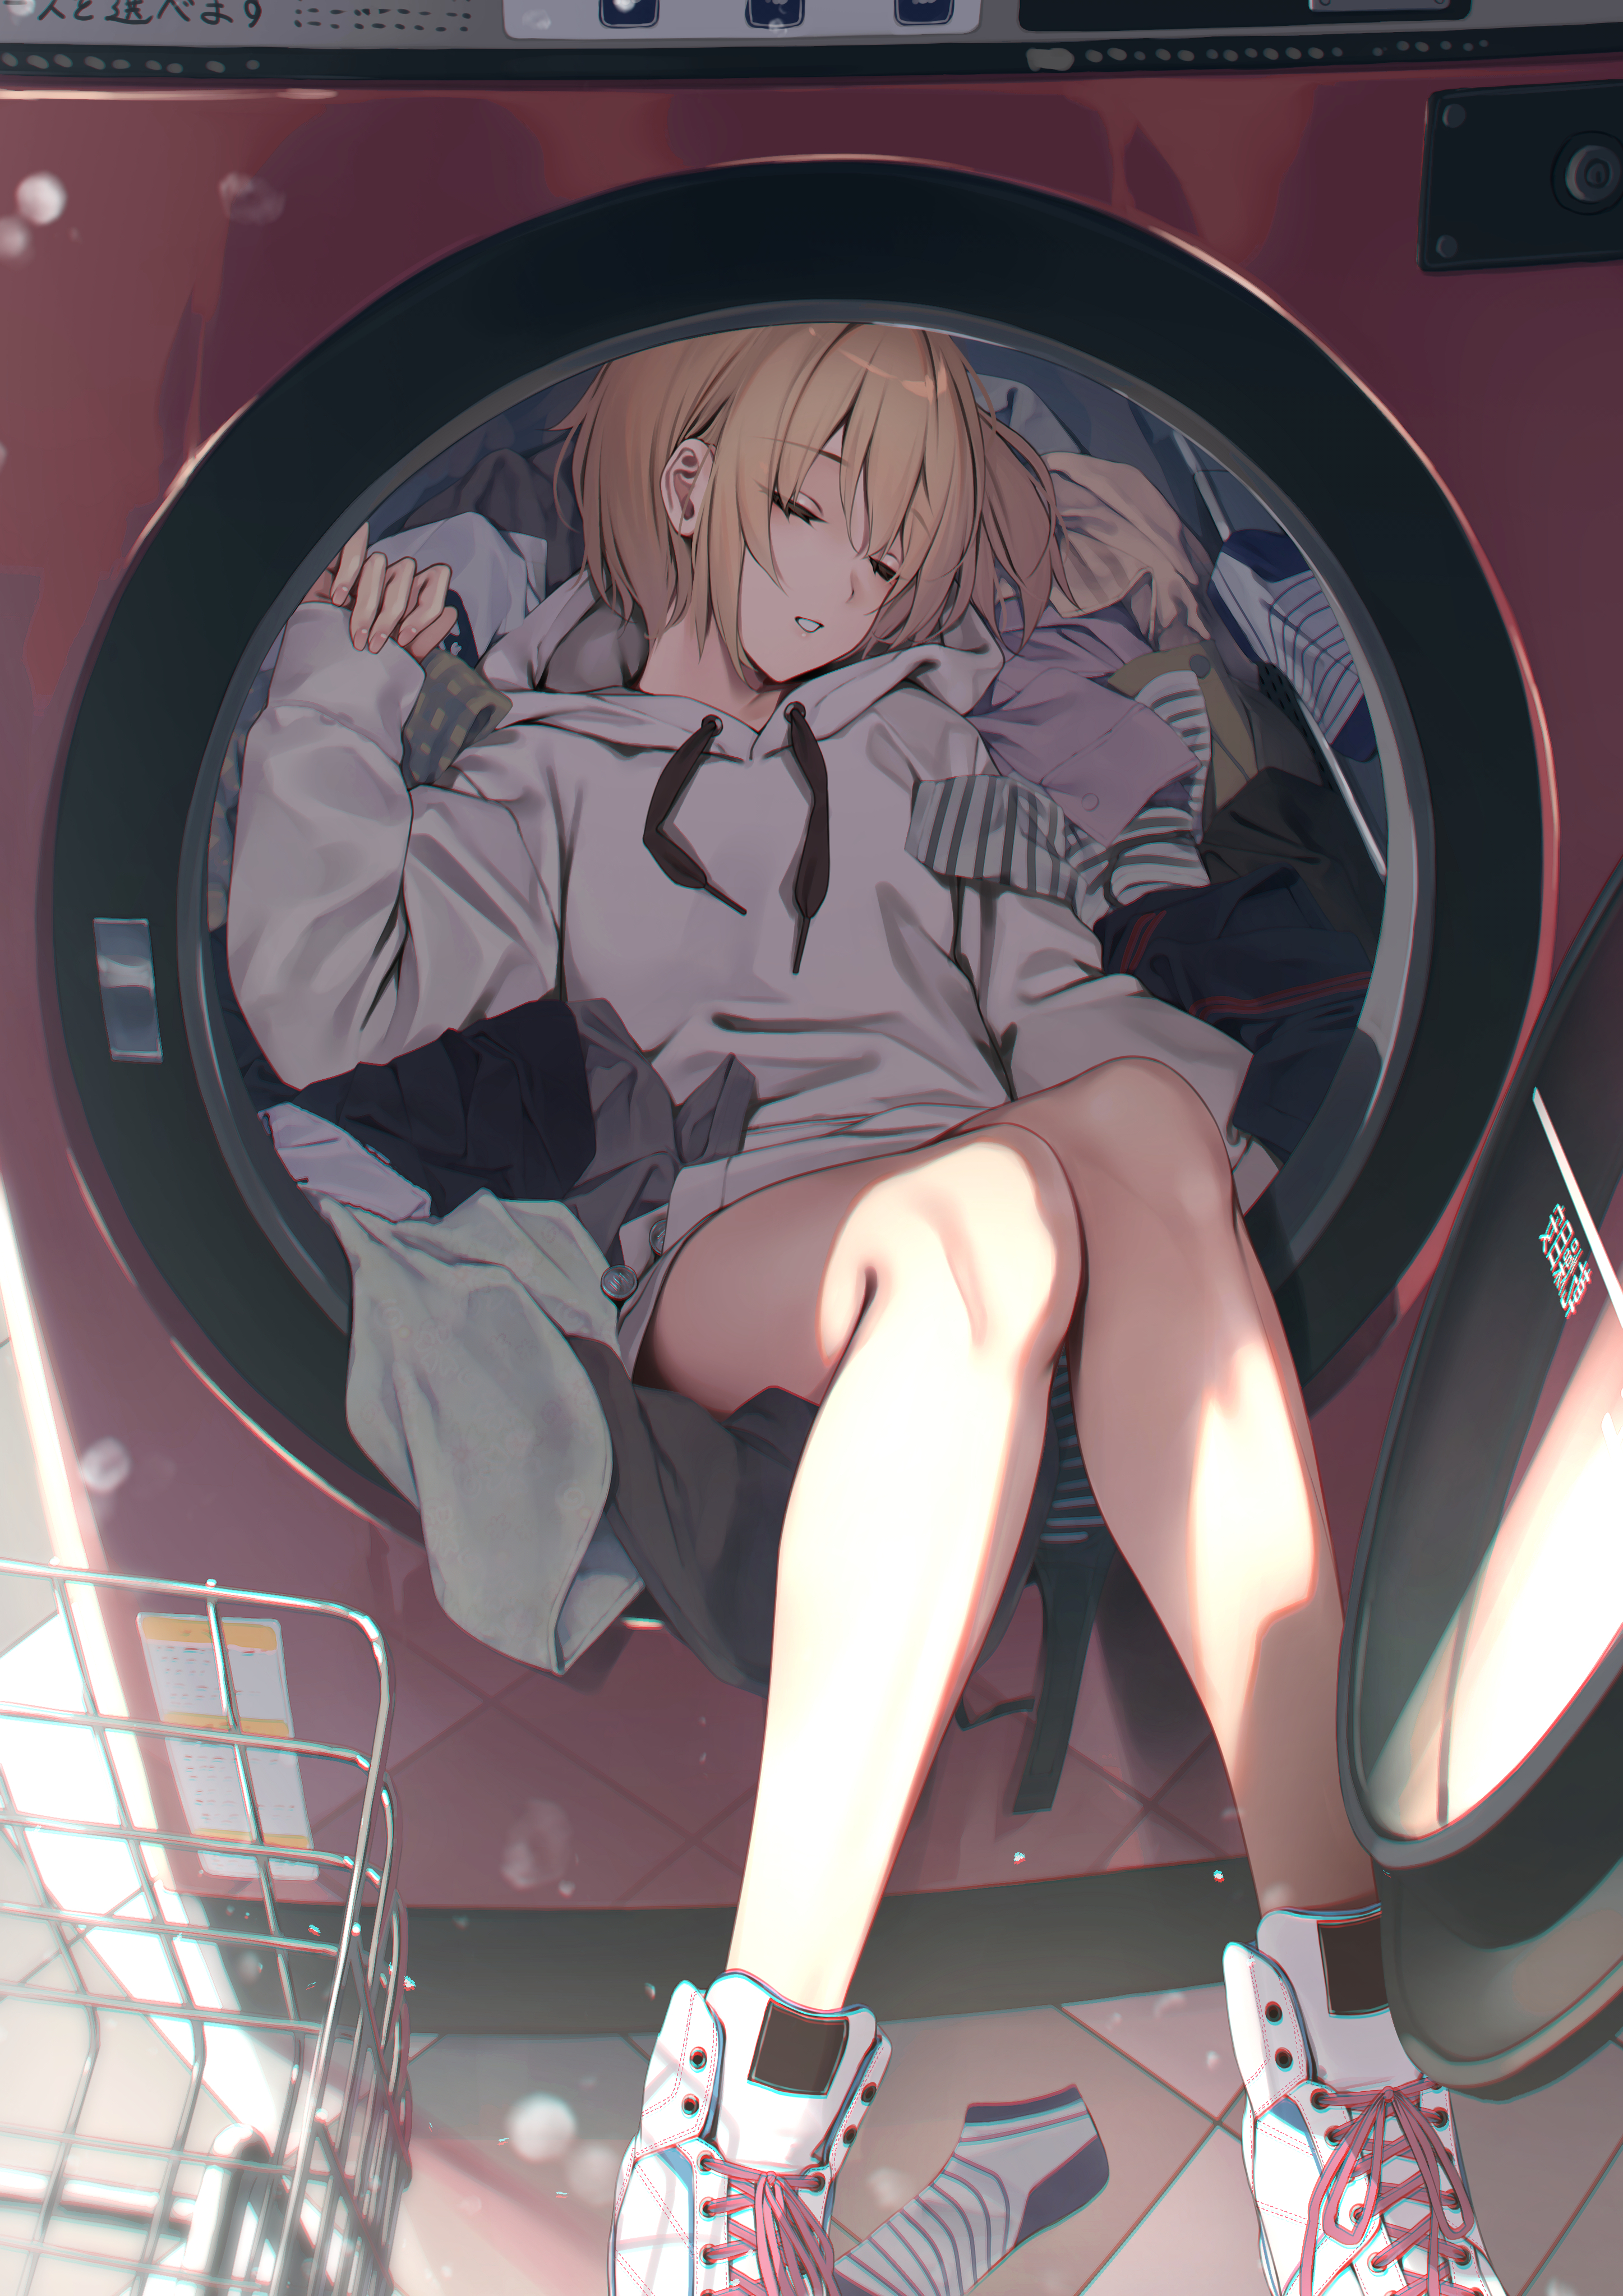 Anime anime girls washing machine blonde short hair sleeping rerrere artwork wallpaper